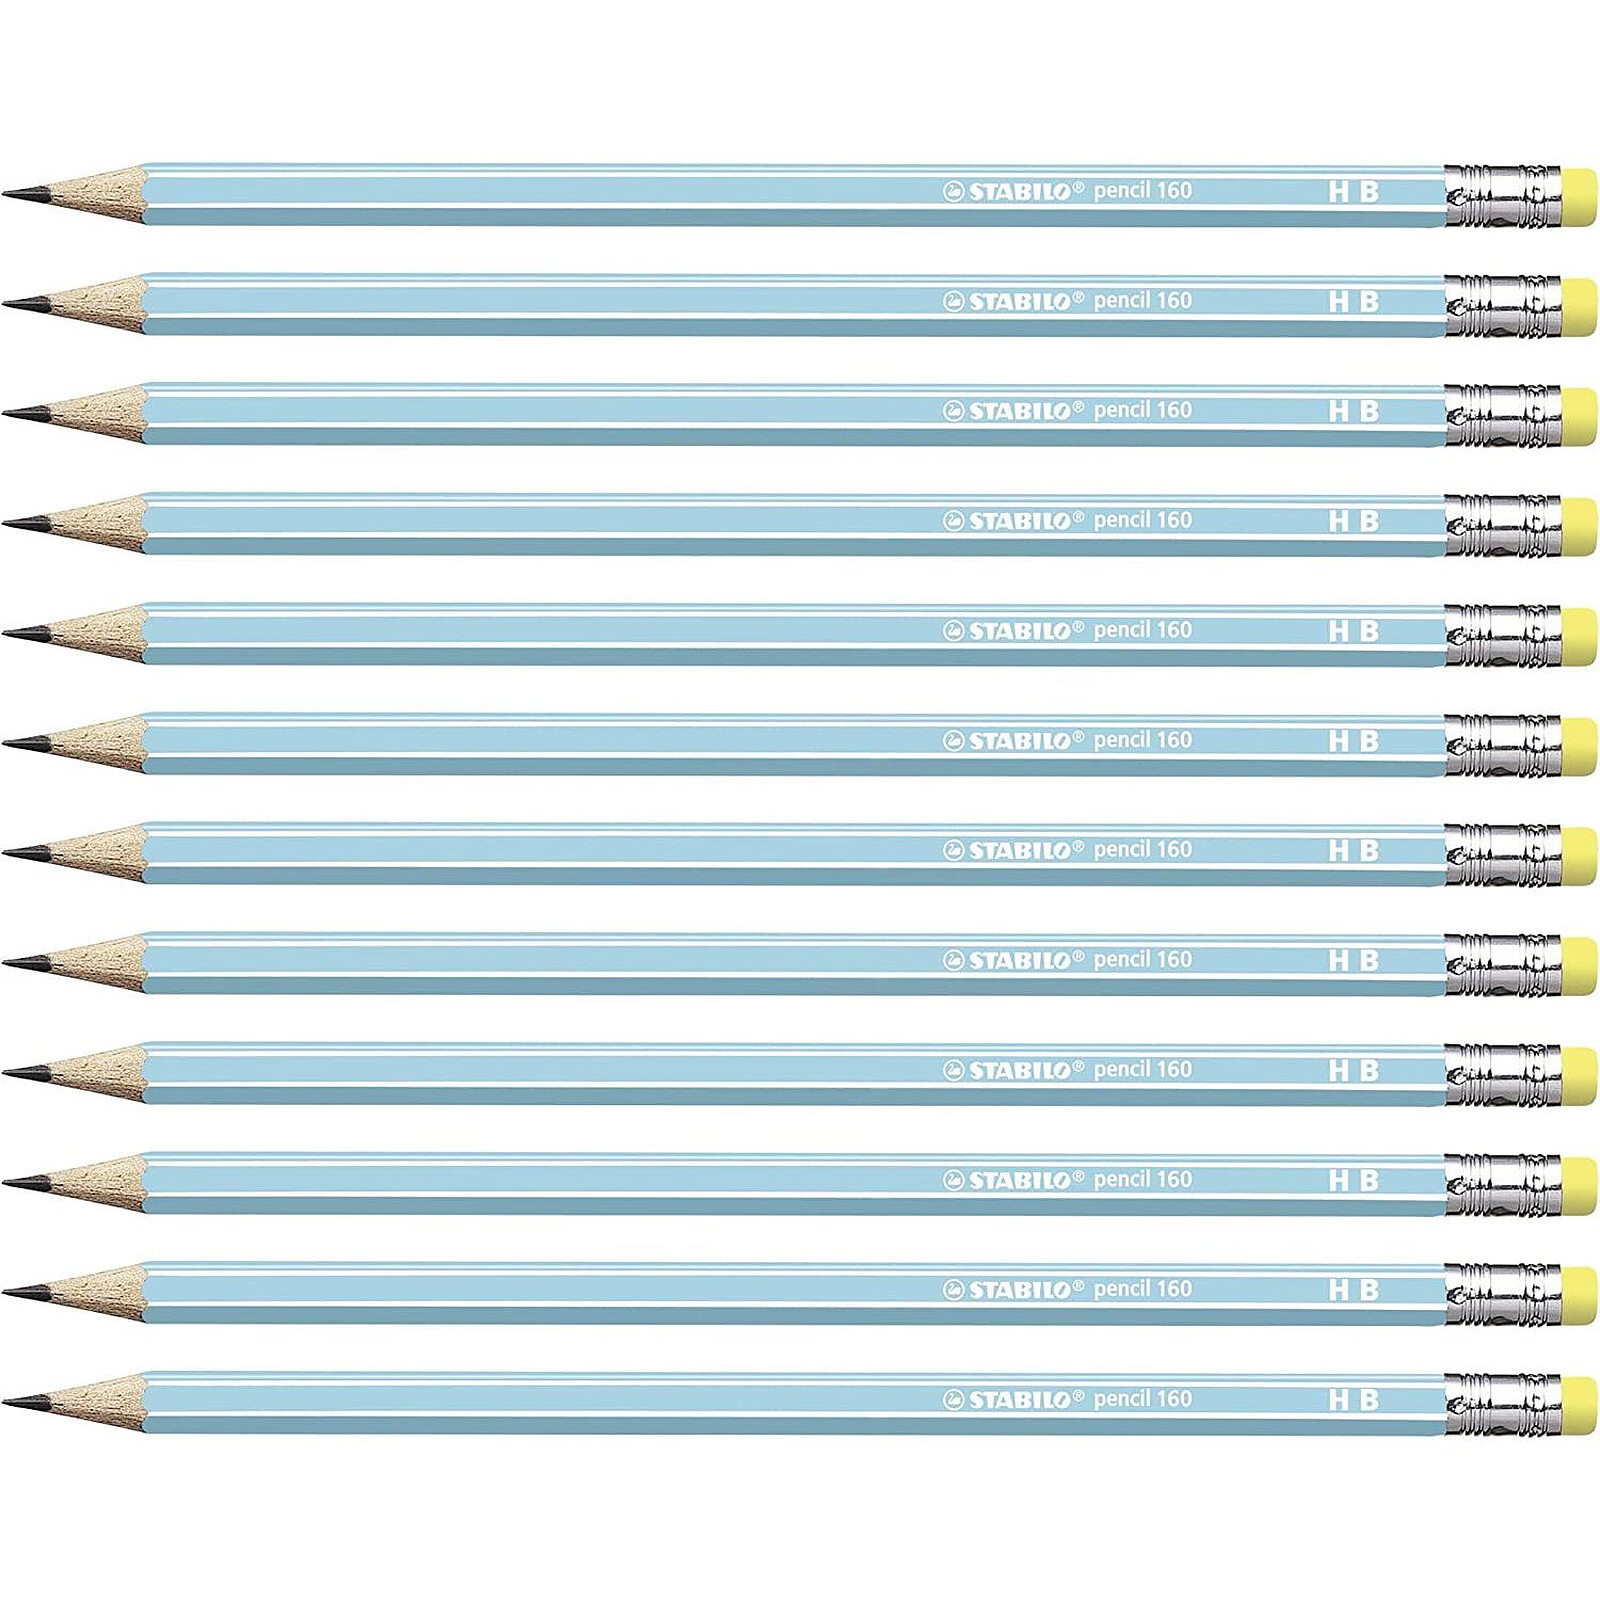 Graphite pencil STABILO pencil 160 - pack of 3, HB + eraser